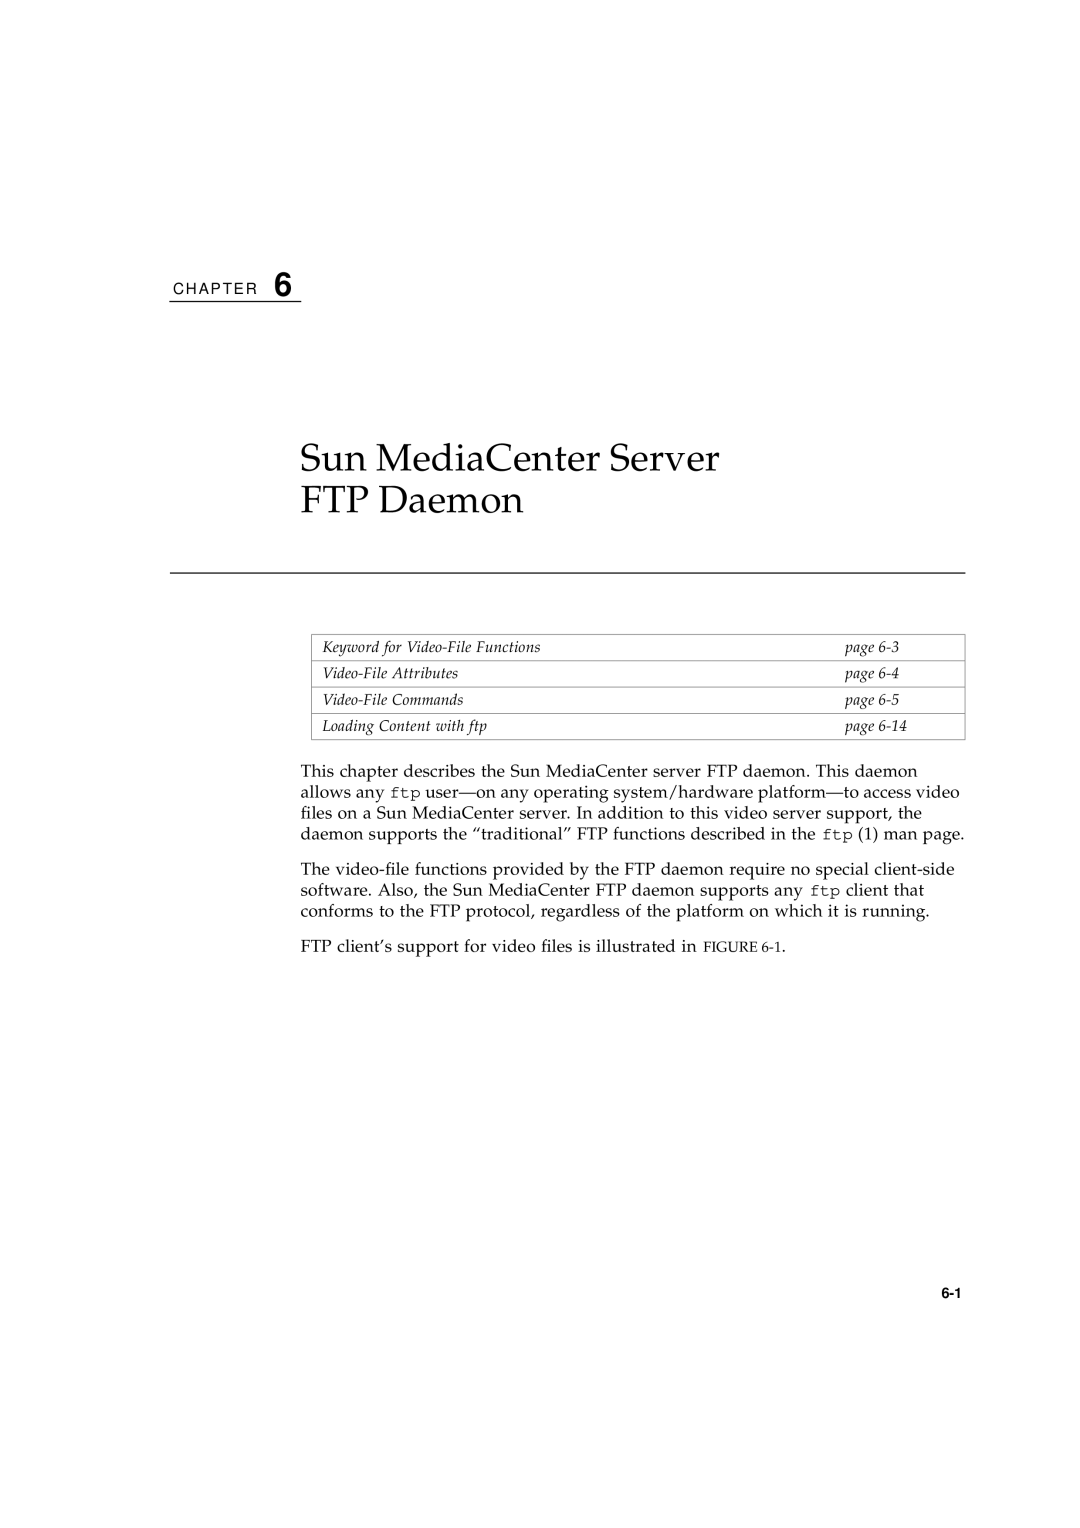 Sun Microsystems 2.1 manual Sun MediaCenter Server FTP Daemon 